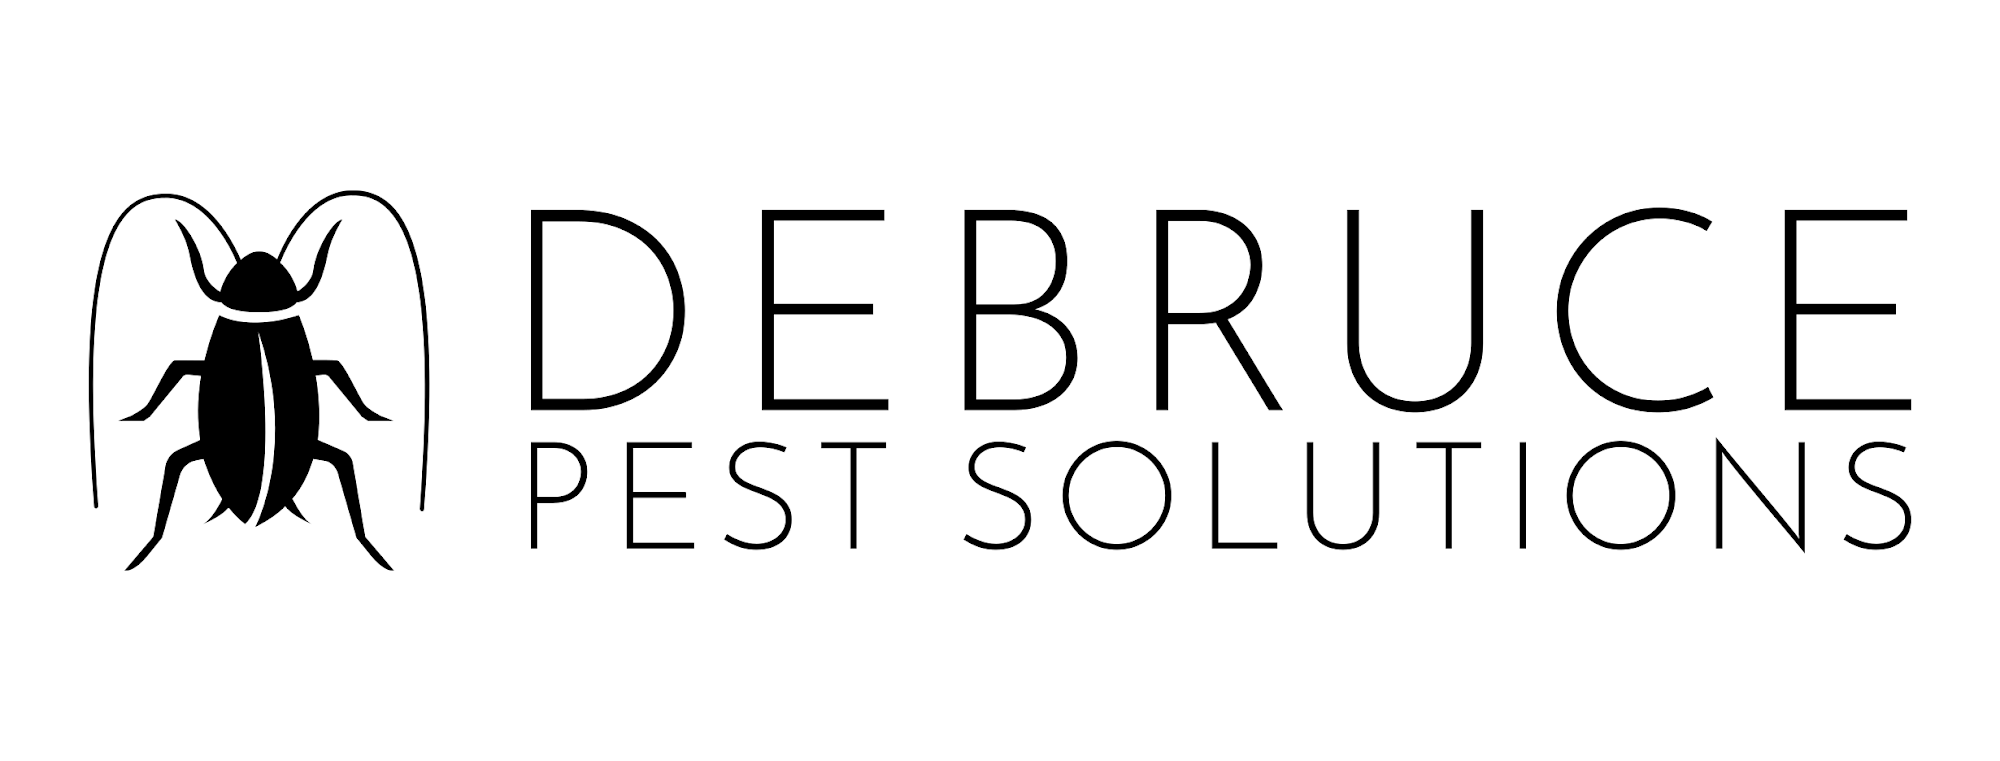 DeBruce Pest Solutions, LLC